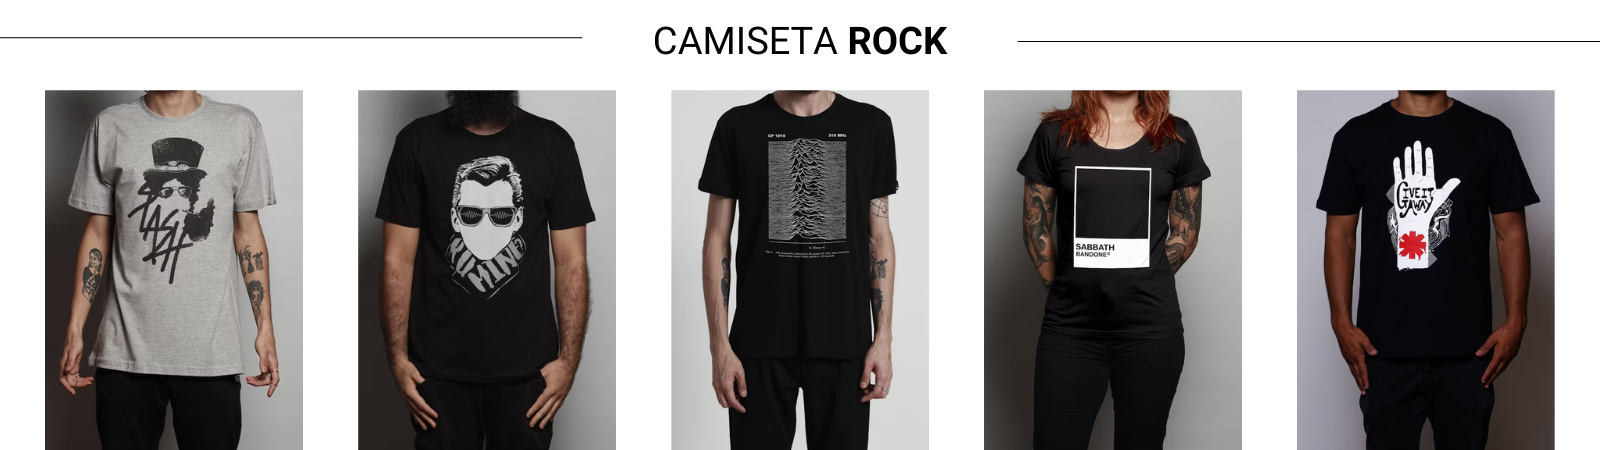 CAMISETA-ROCK--1--1